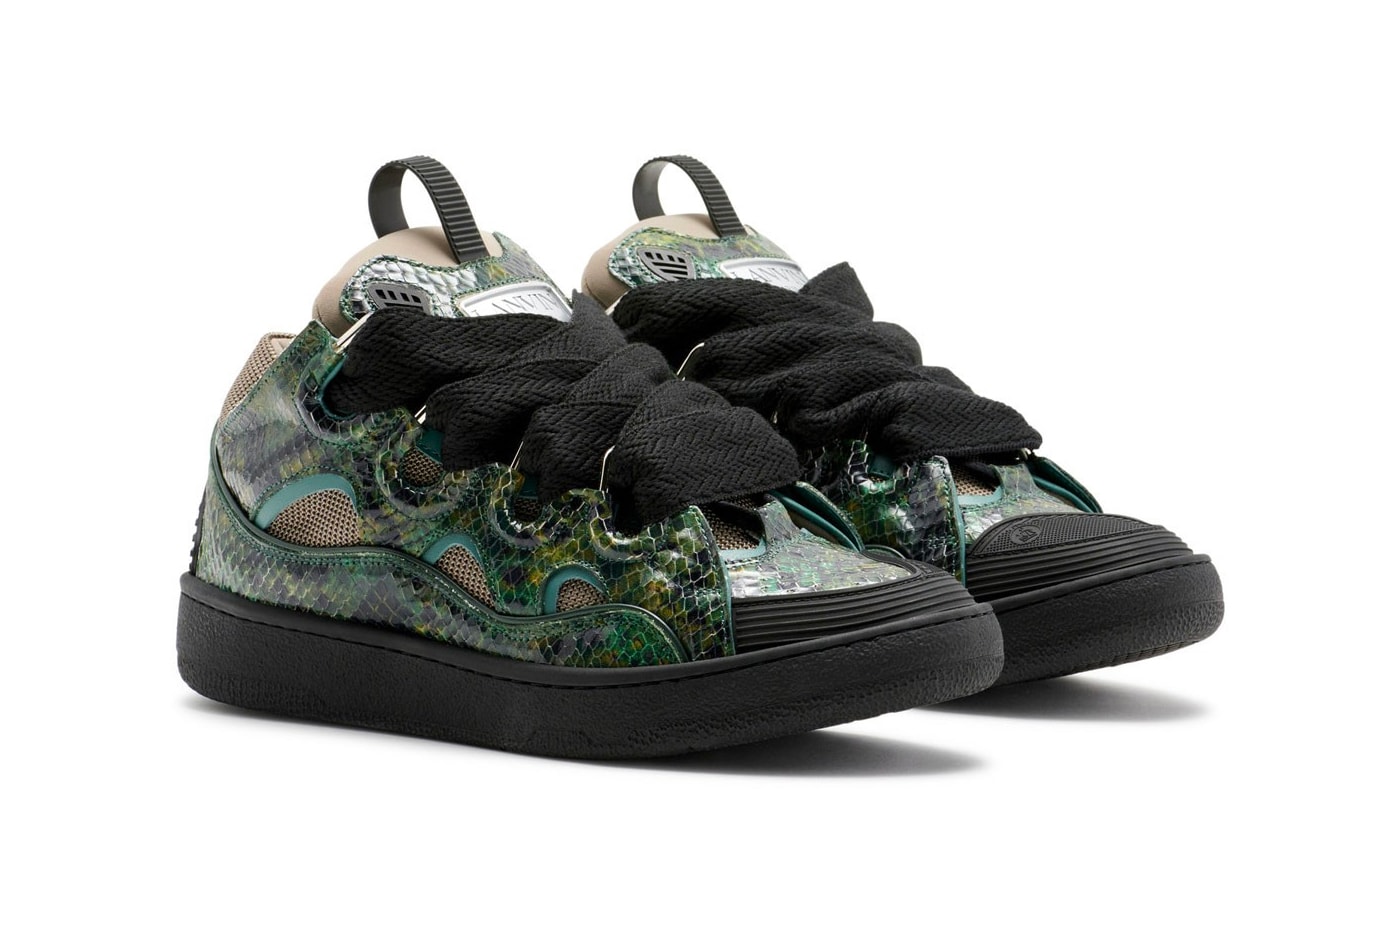 Lanvin’s Curb Sneaker Gets a Reptilian Makeover Footwear